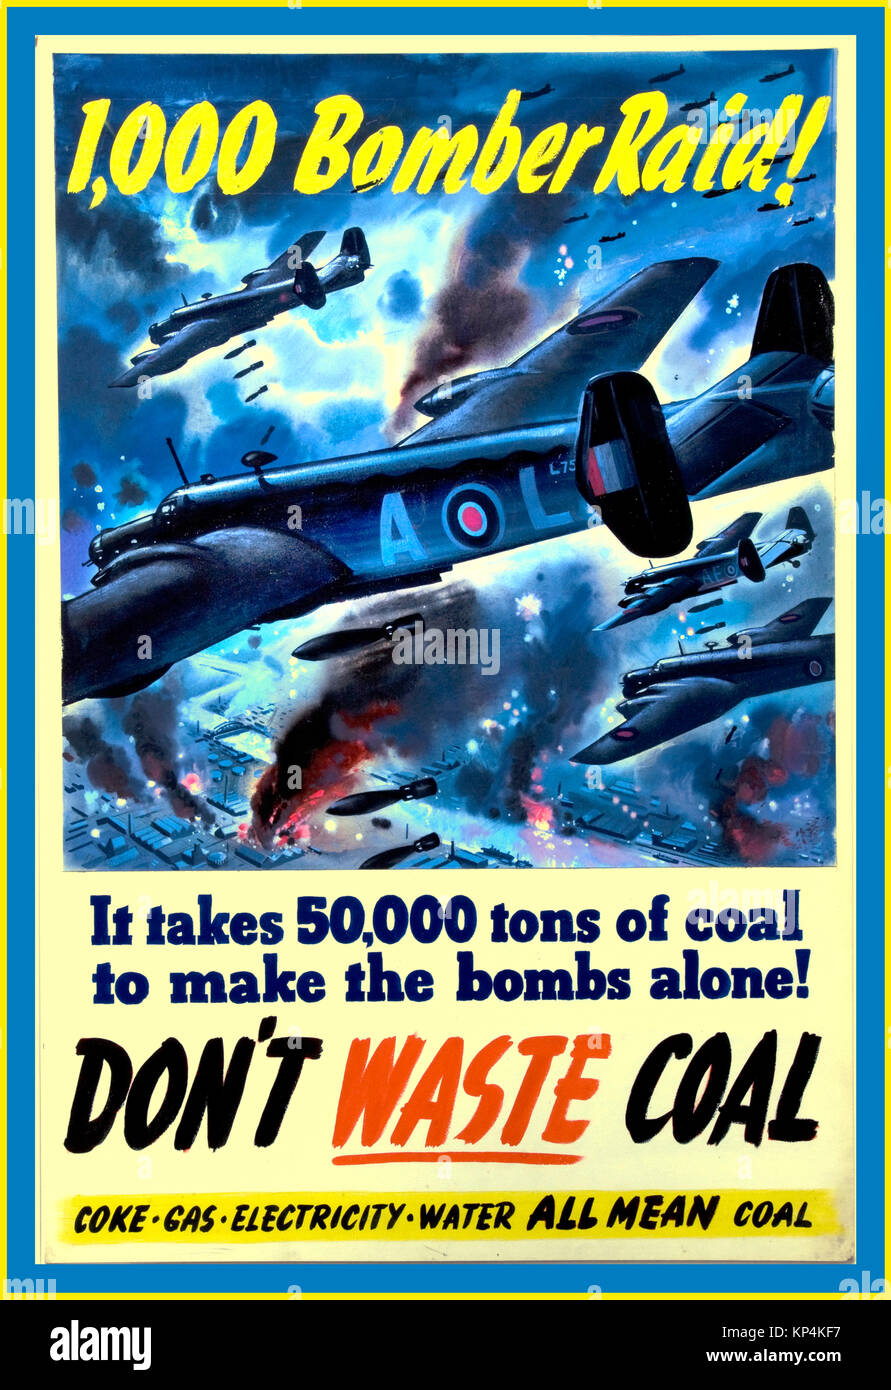 WW2 Vintage UK propaganda poster 1940's British government alert during World War 2  “1000 Bomber Raid-DONT WASTE COAL” Stock Photo